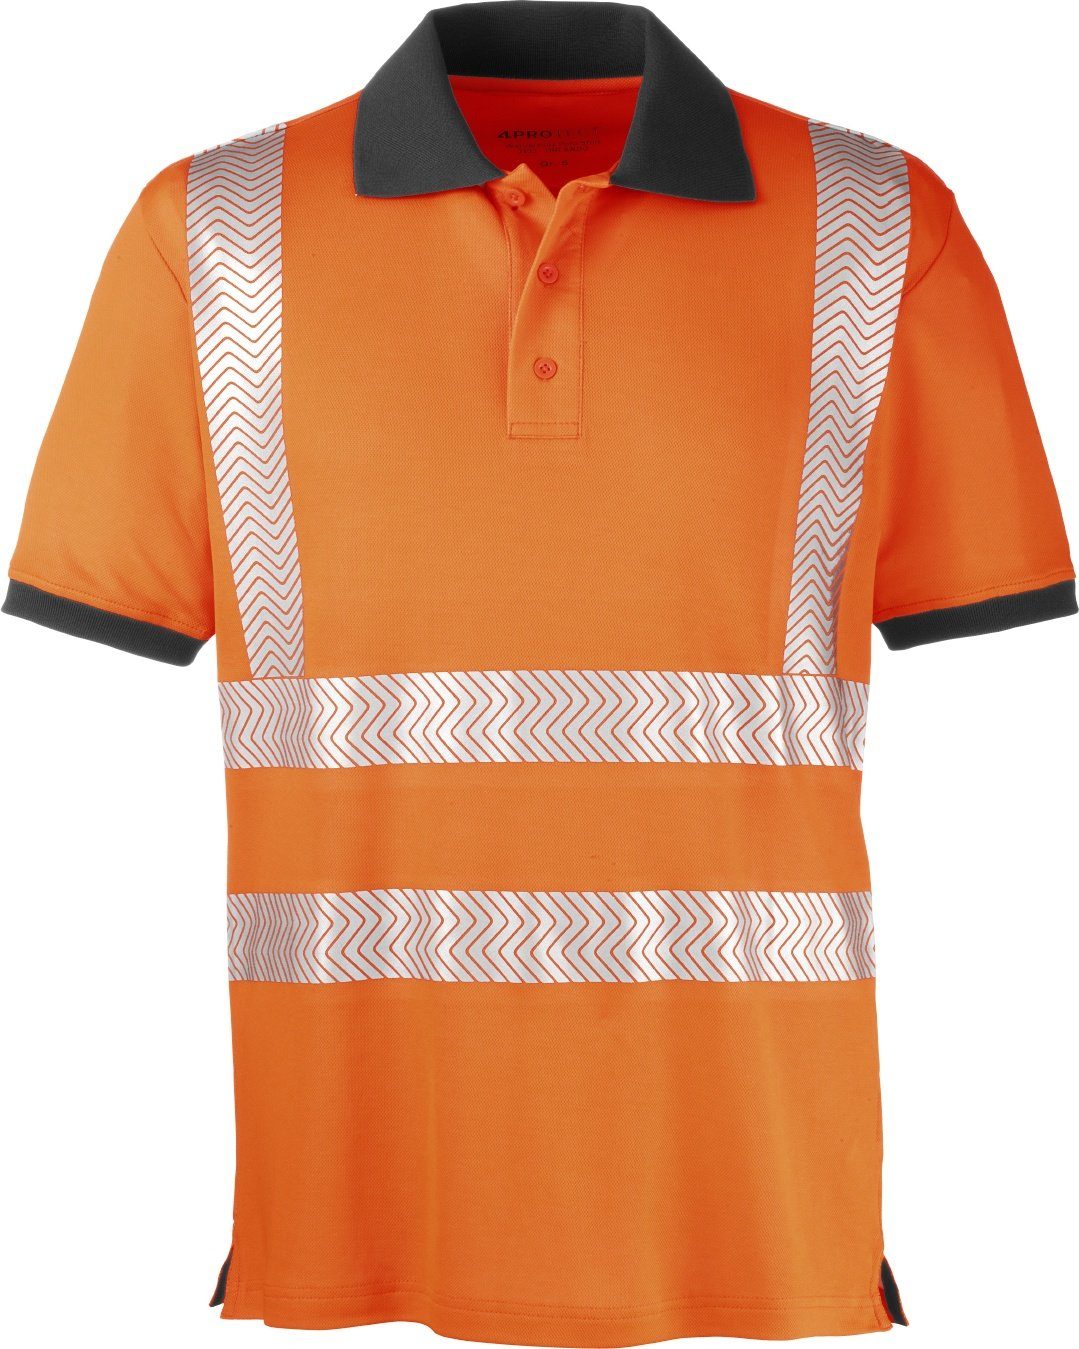 4PROTECT Warnschutz-Polo-Shirt Orlando Warnschutz-Shirt